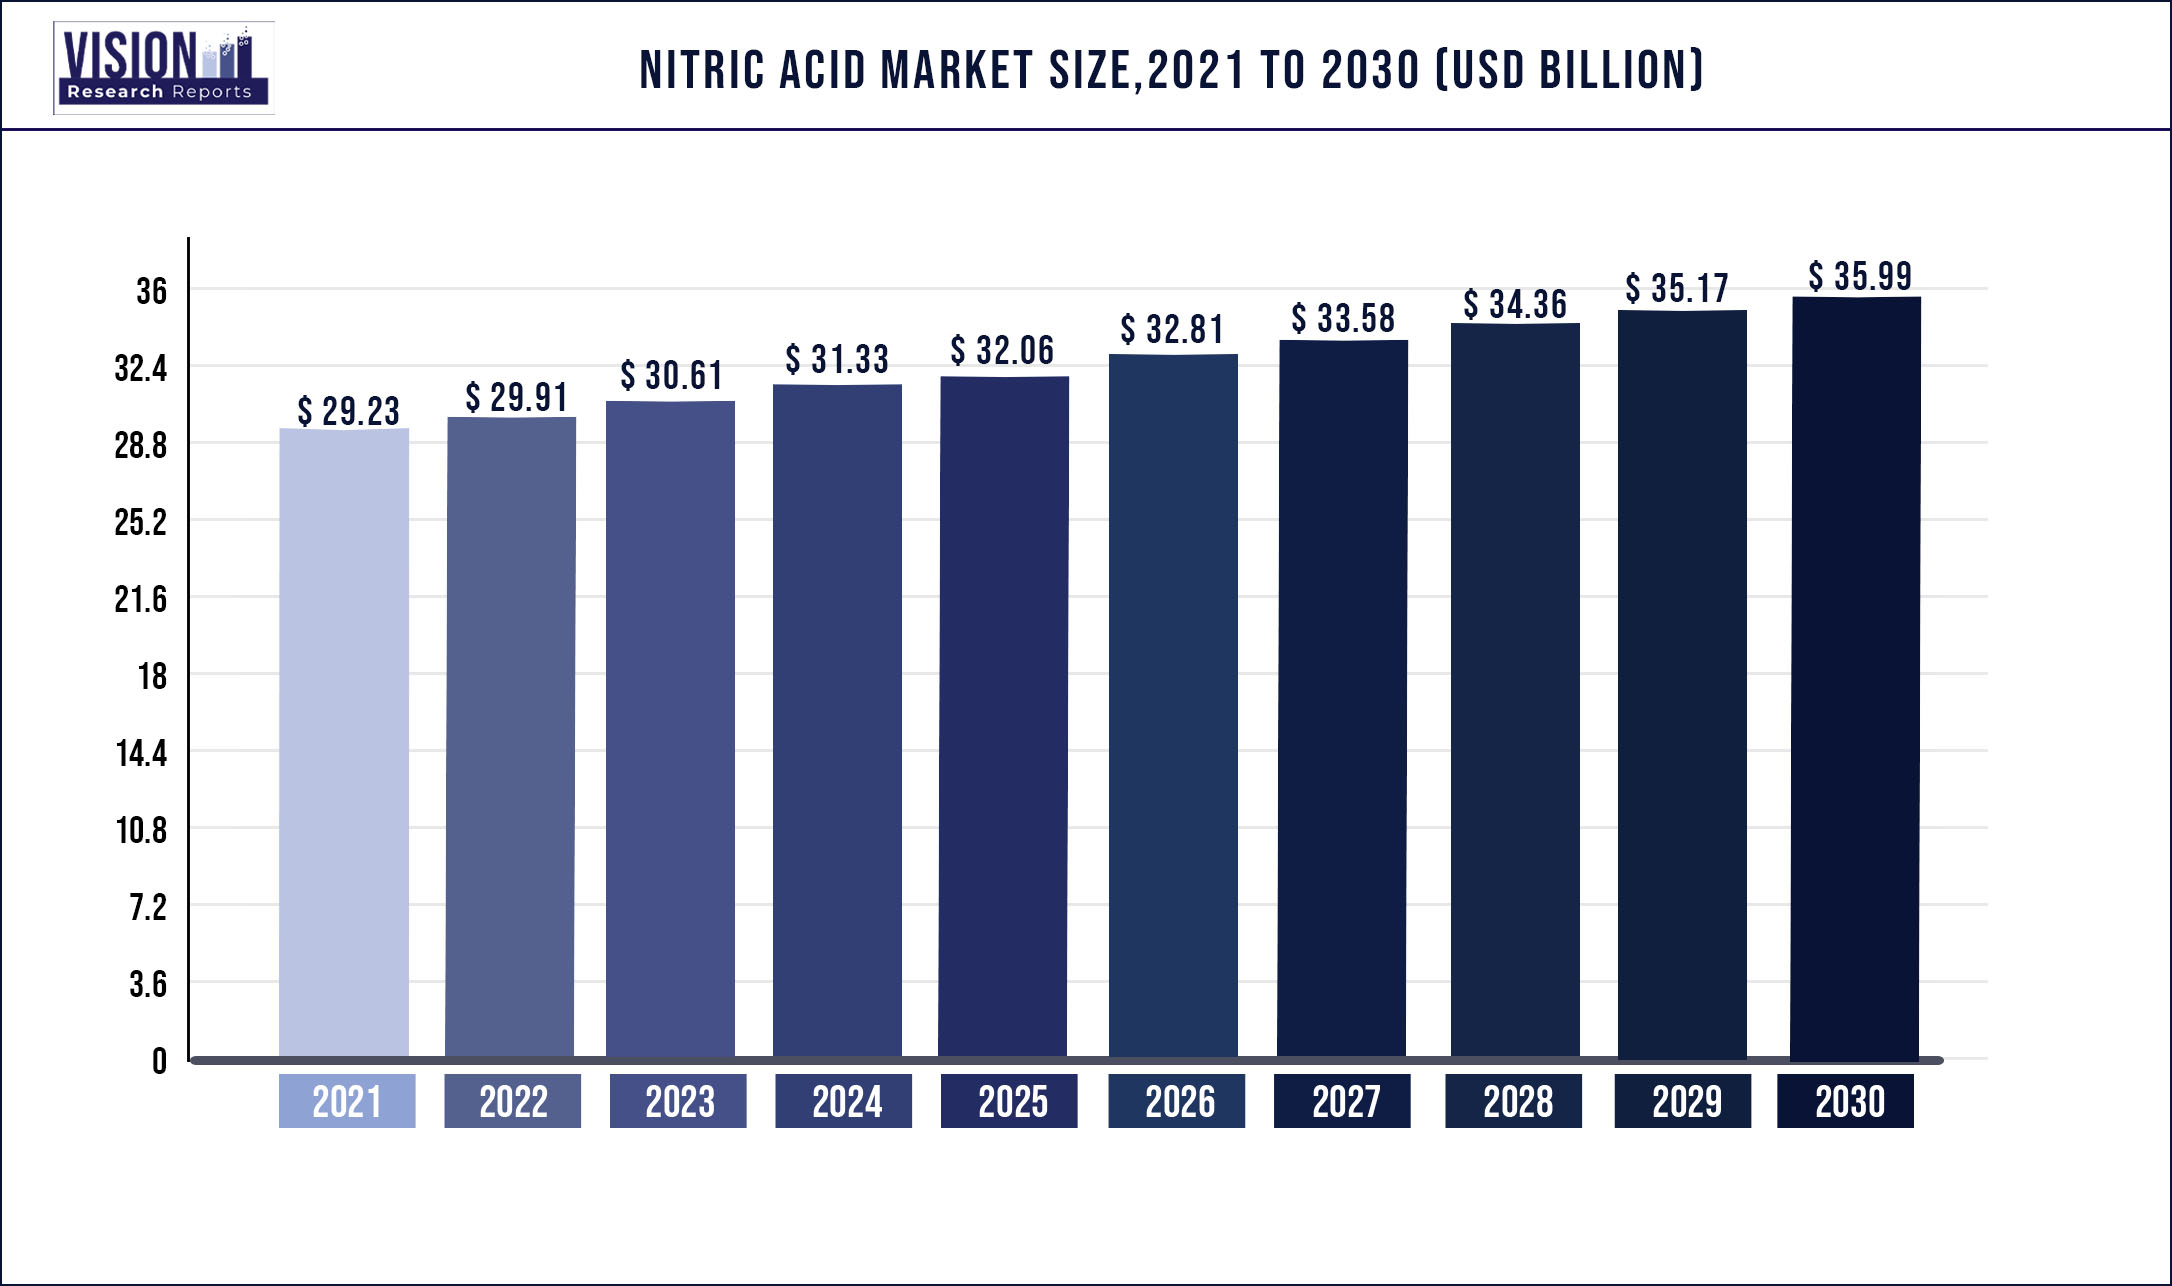 Nitric Acid Market Size 2021 to 2030